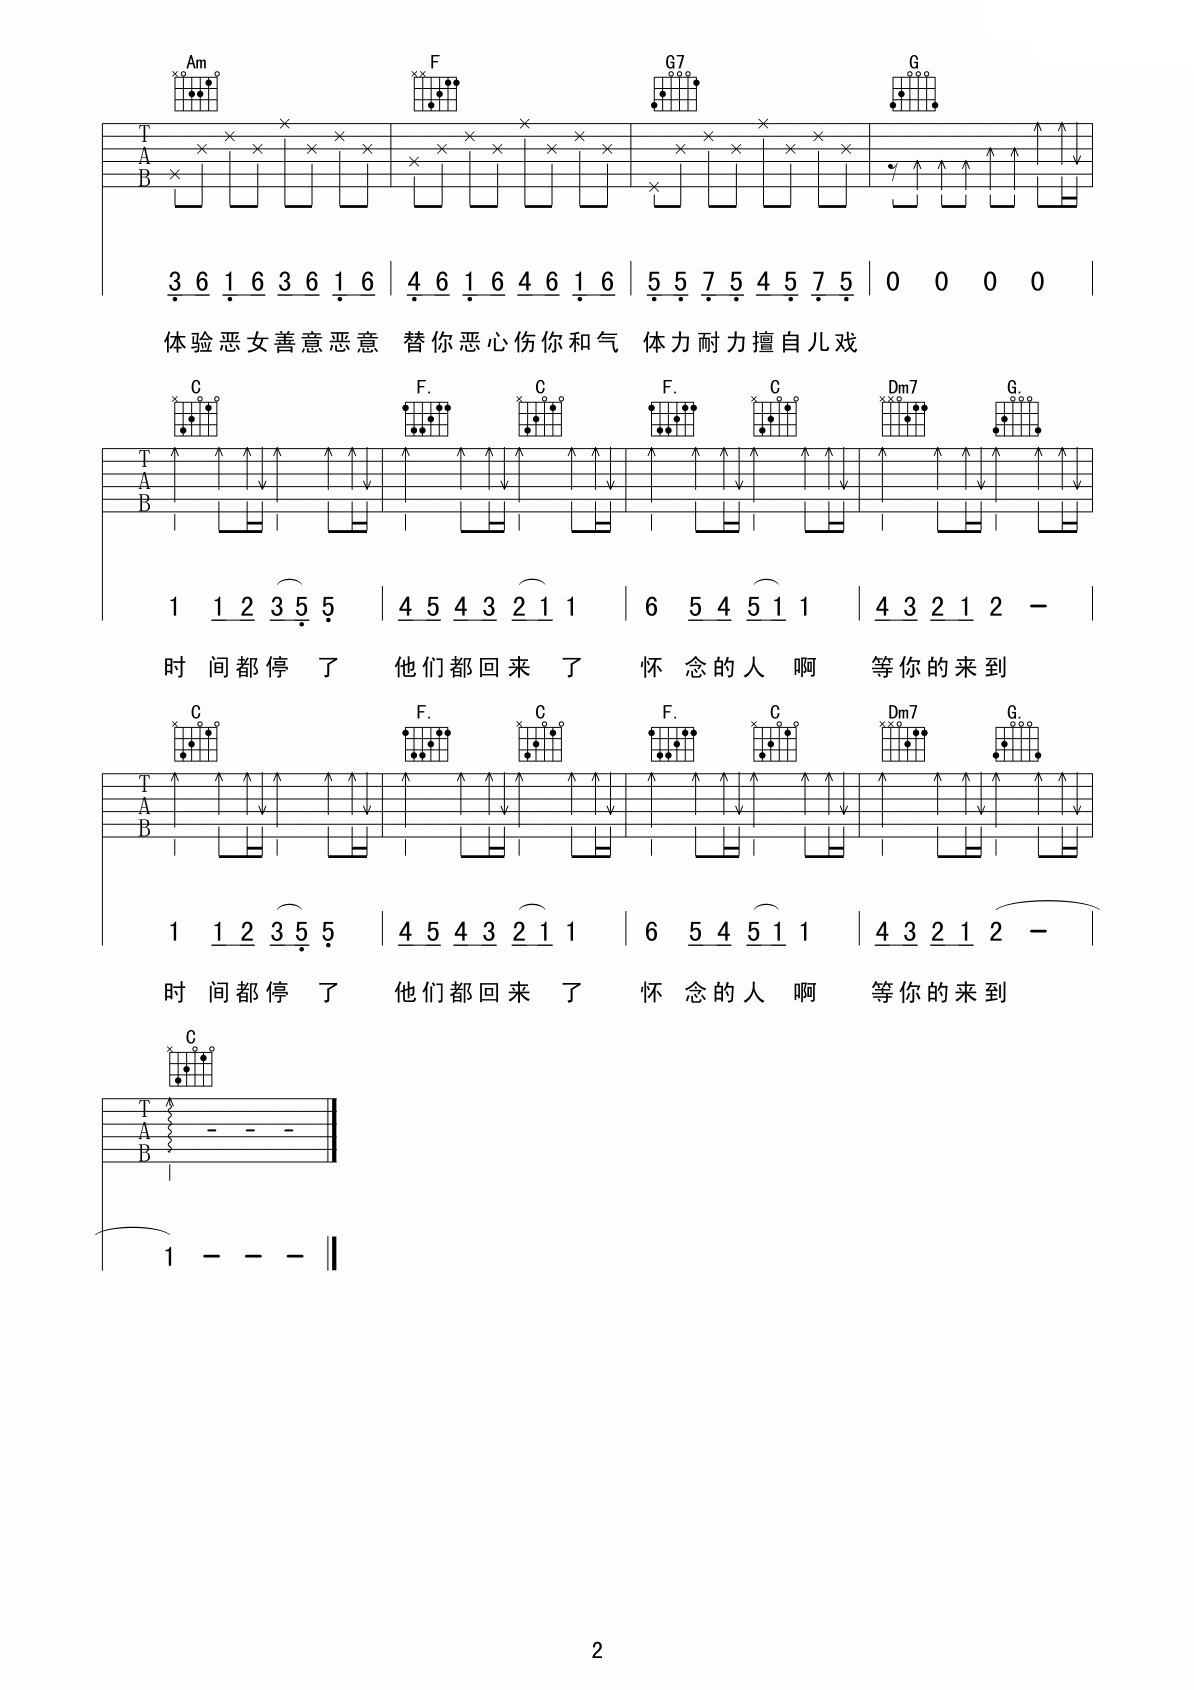 T1213121吉他谱 C调完美版-超越琴行编配-五月天插图1